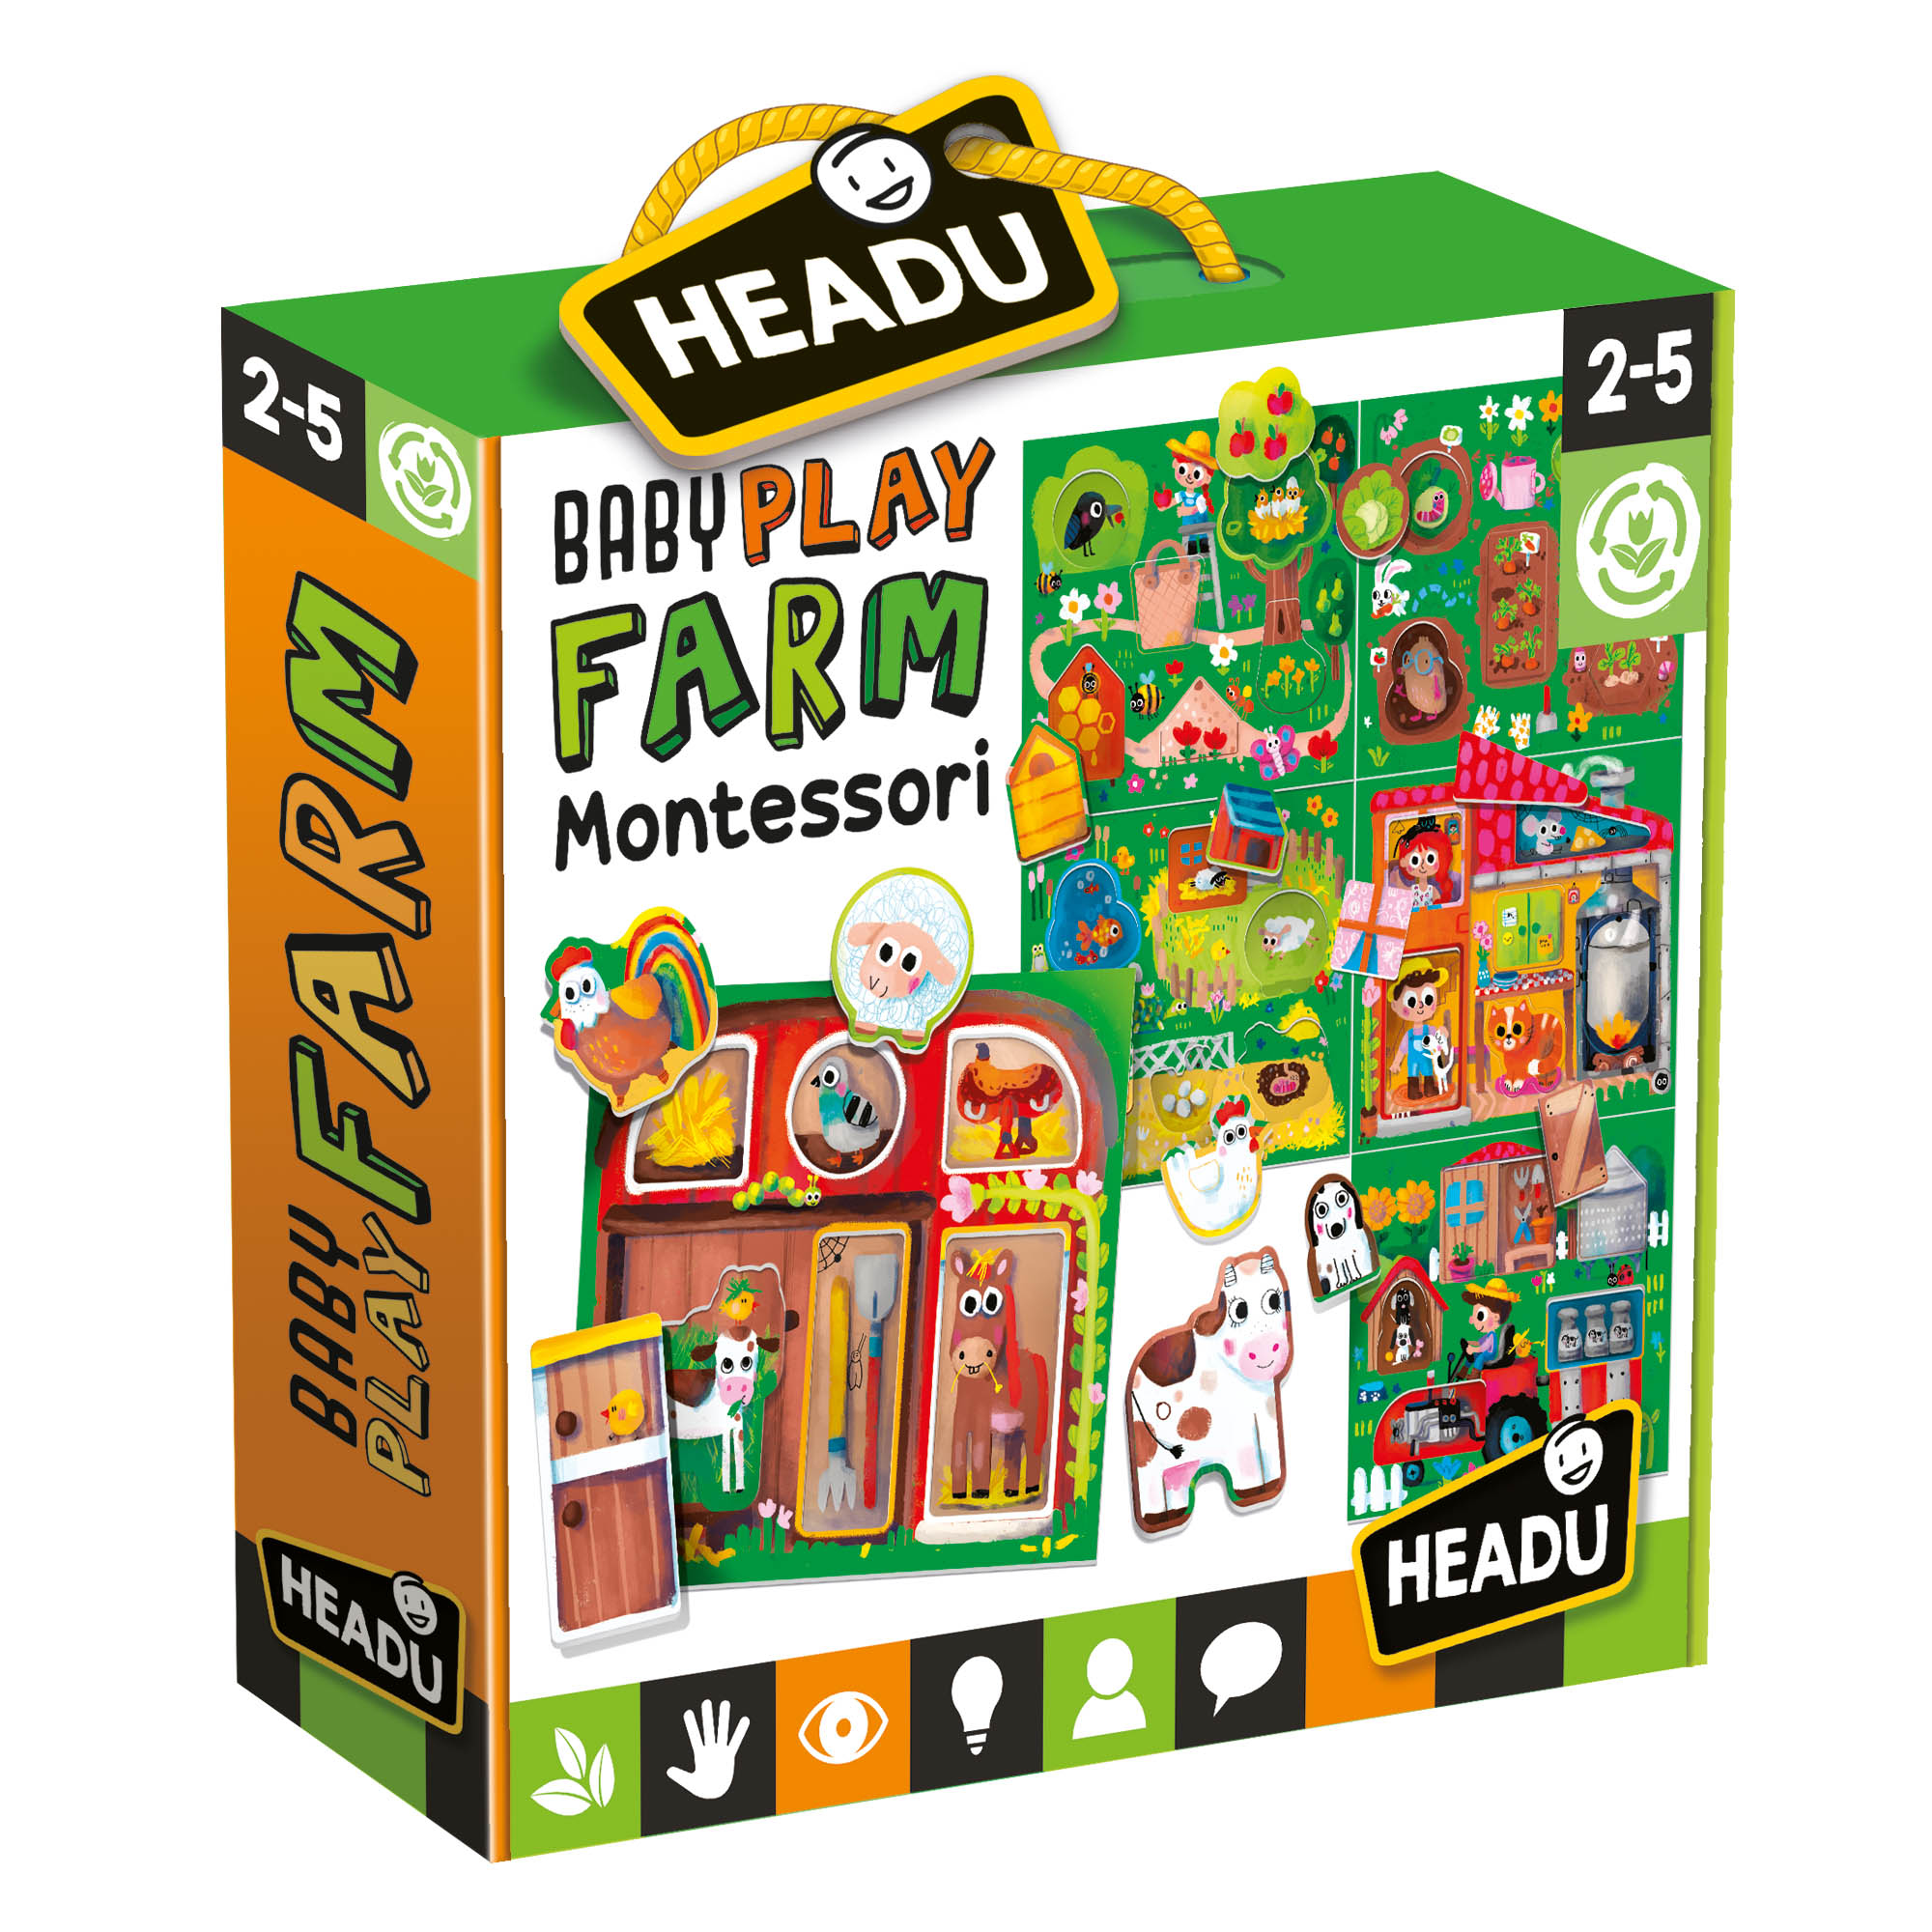 Headu - headu baby play farm montessori - HEADU